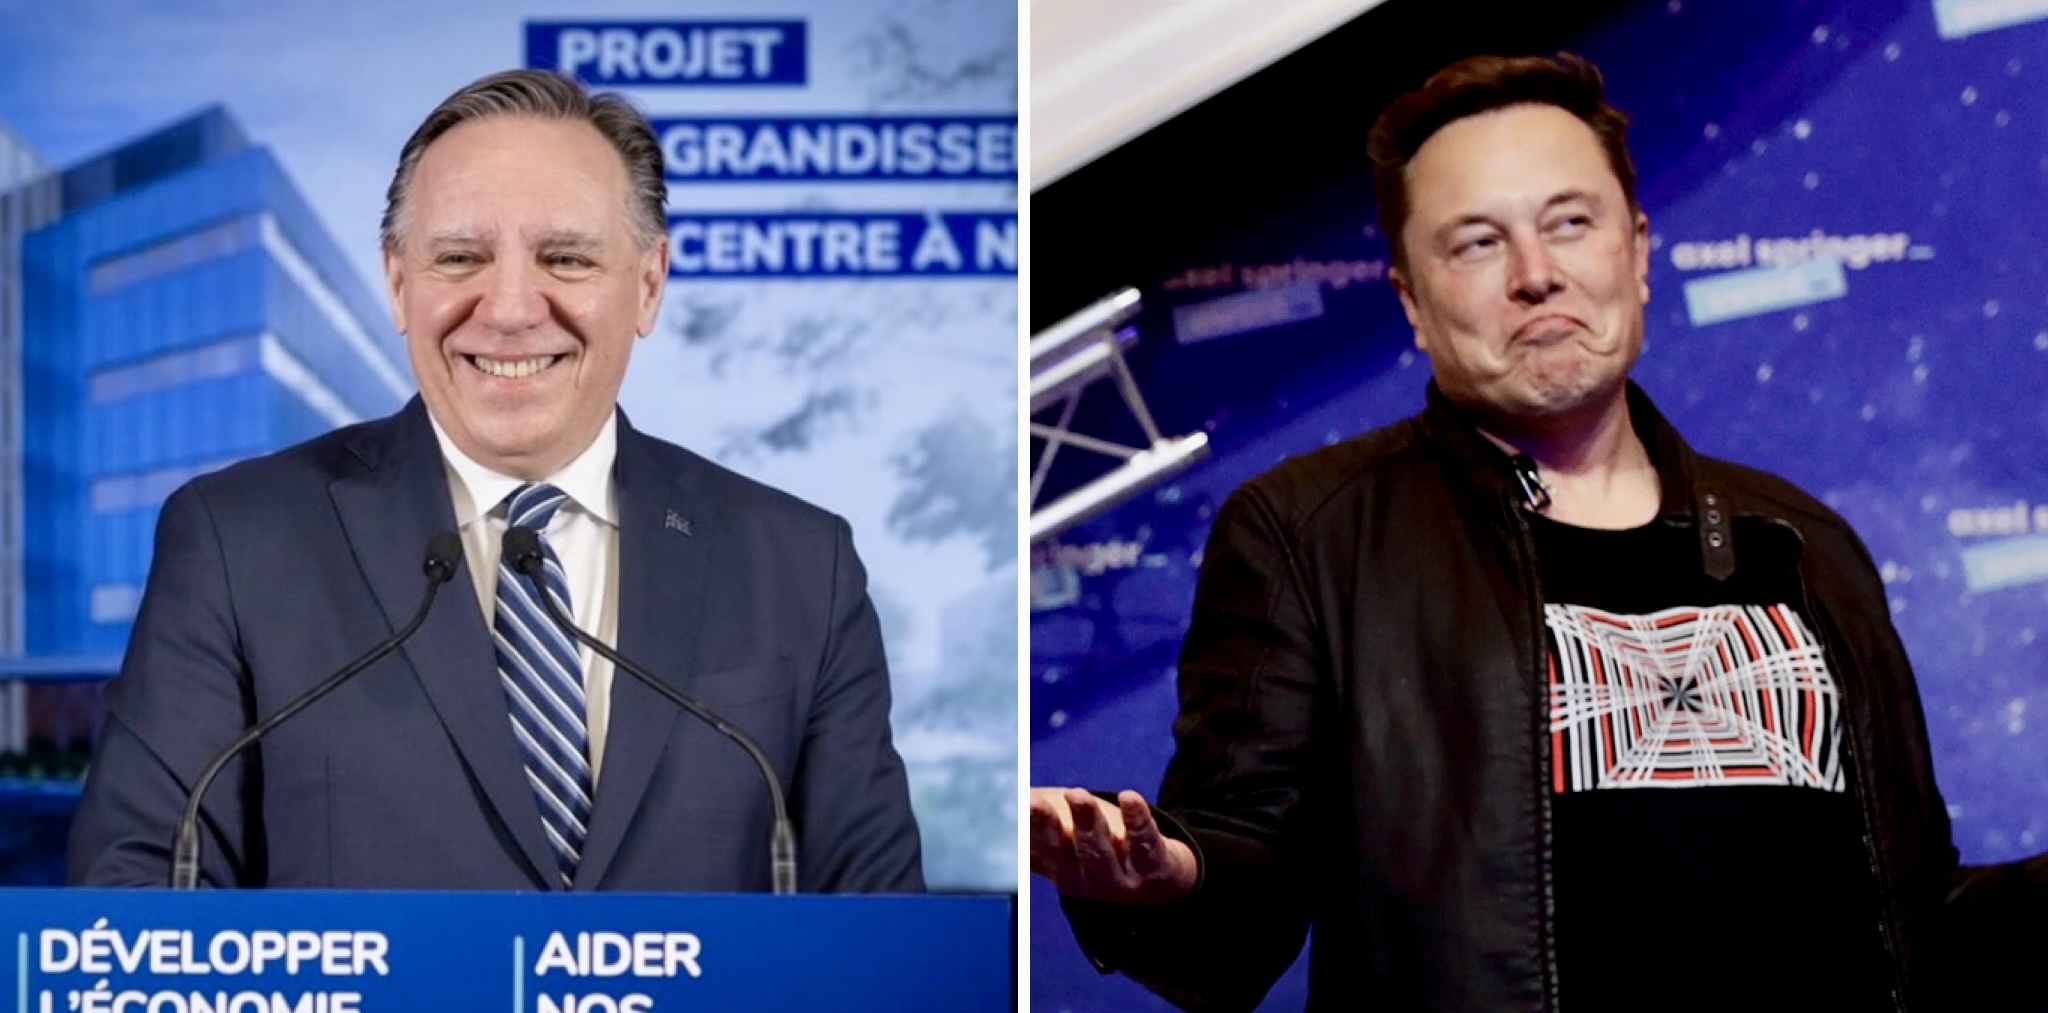 Quebec government Elon Musk SpaceX high-speed internet François legault